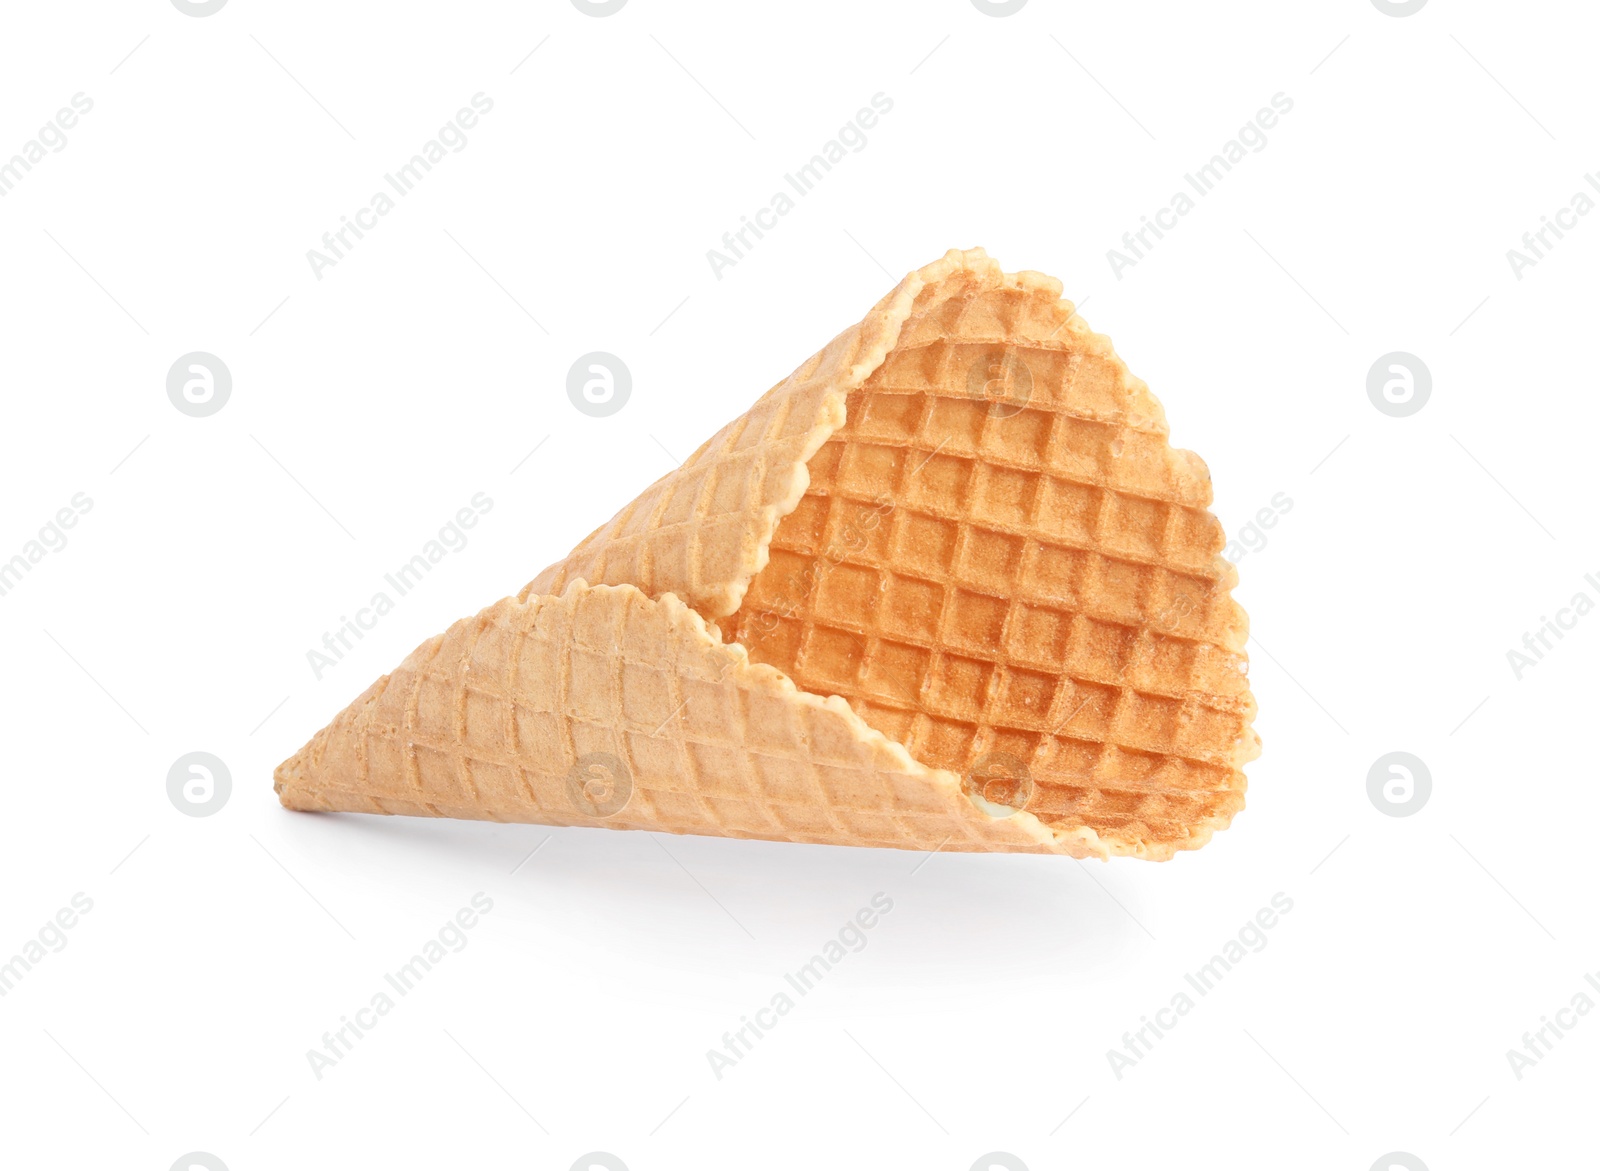 Photo of Empty wafer ice cream cone on white background